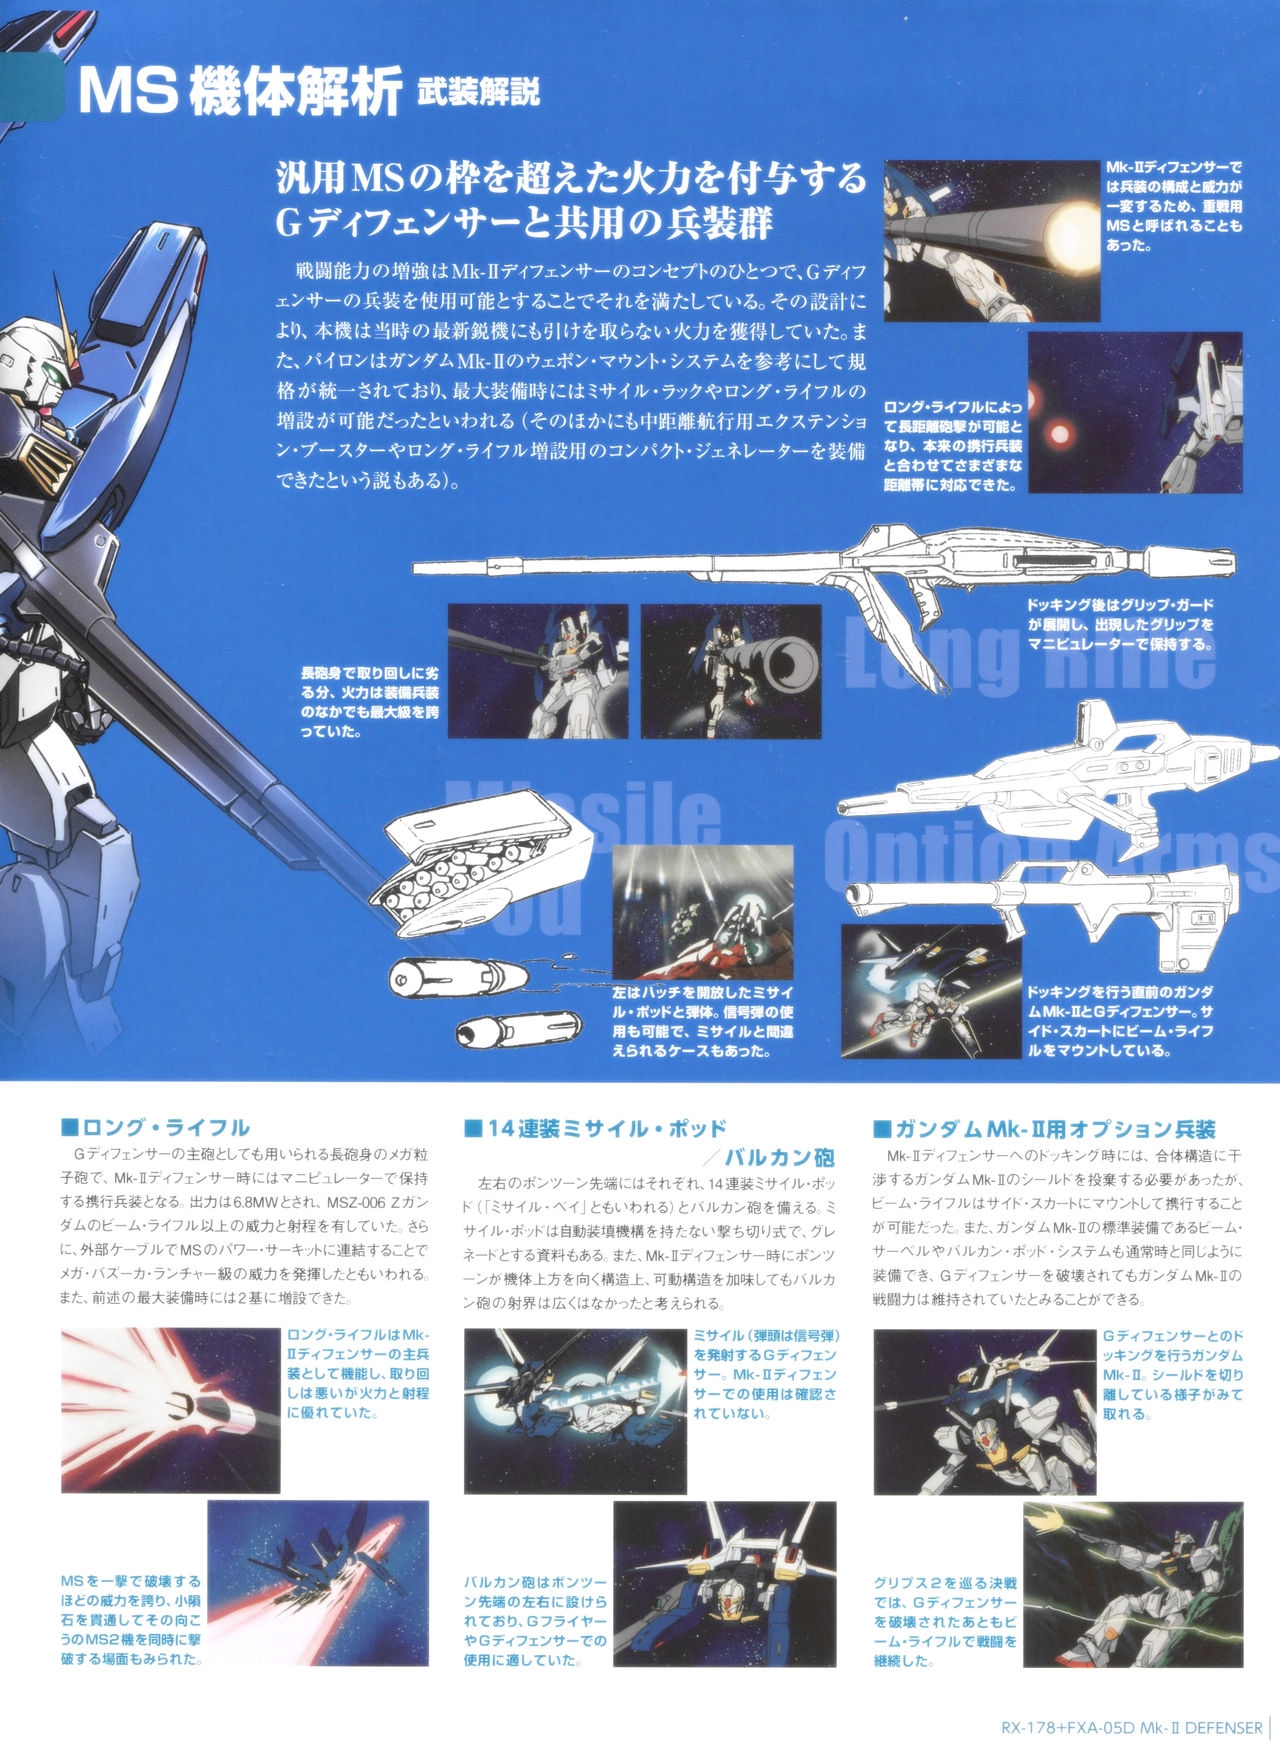 Gundam Mobile Suit Bible 67 9